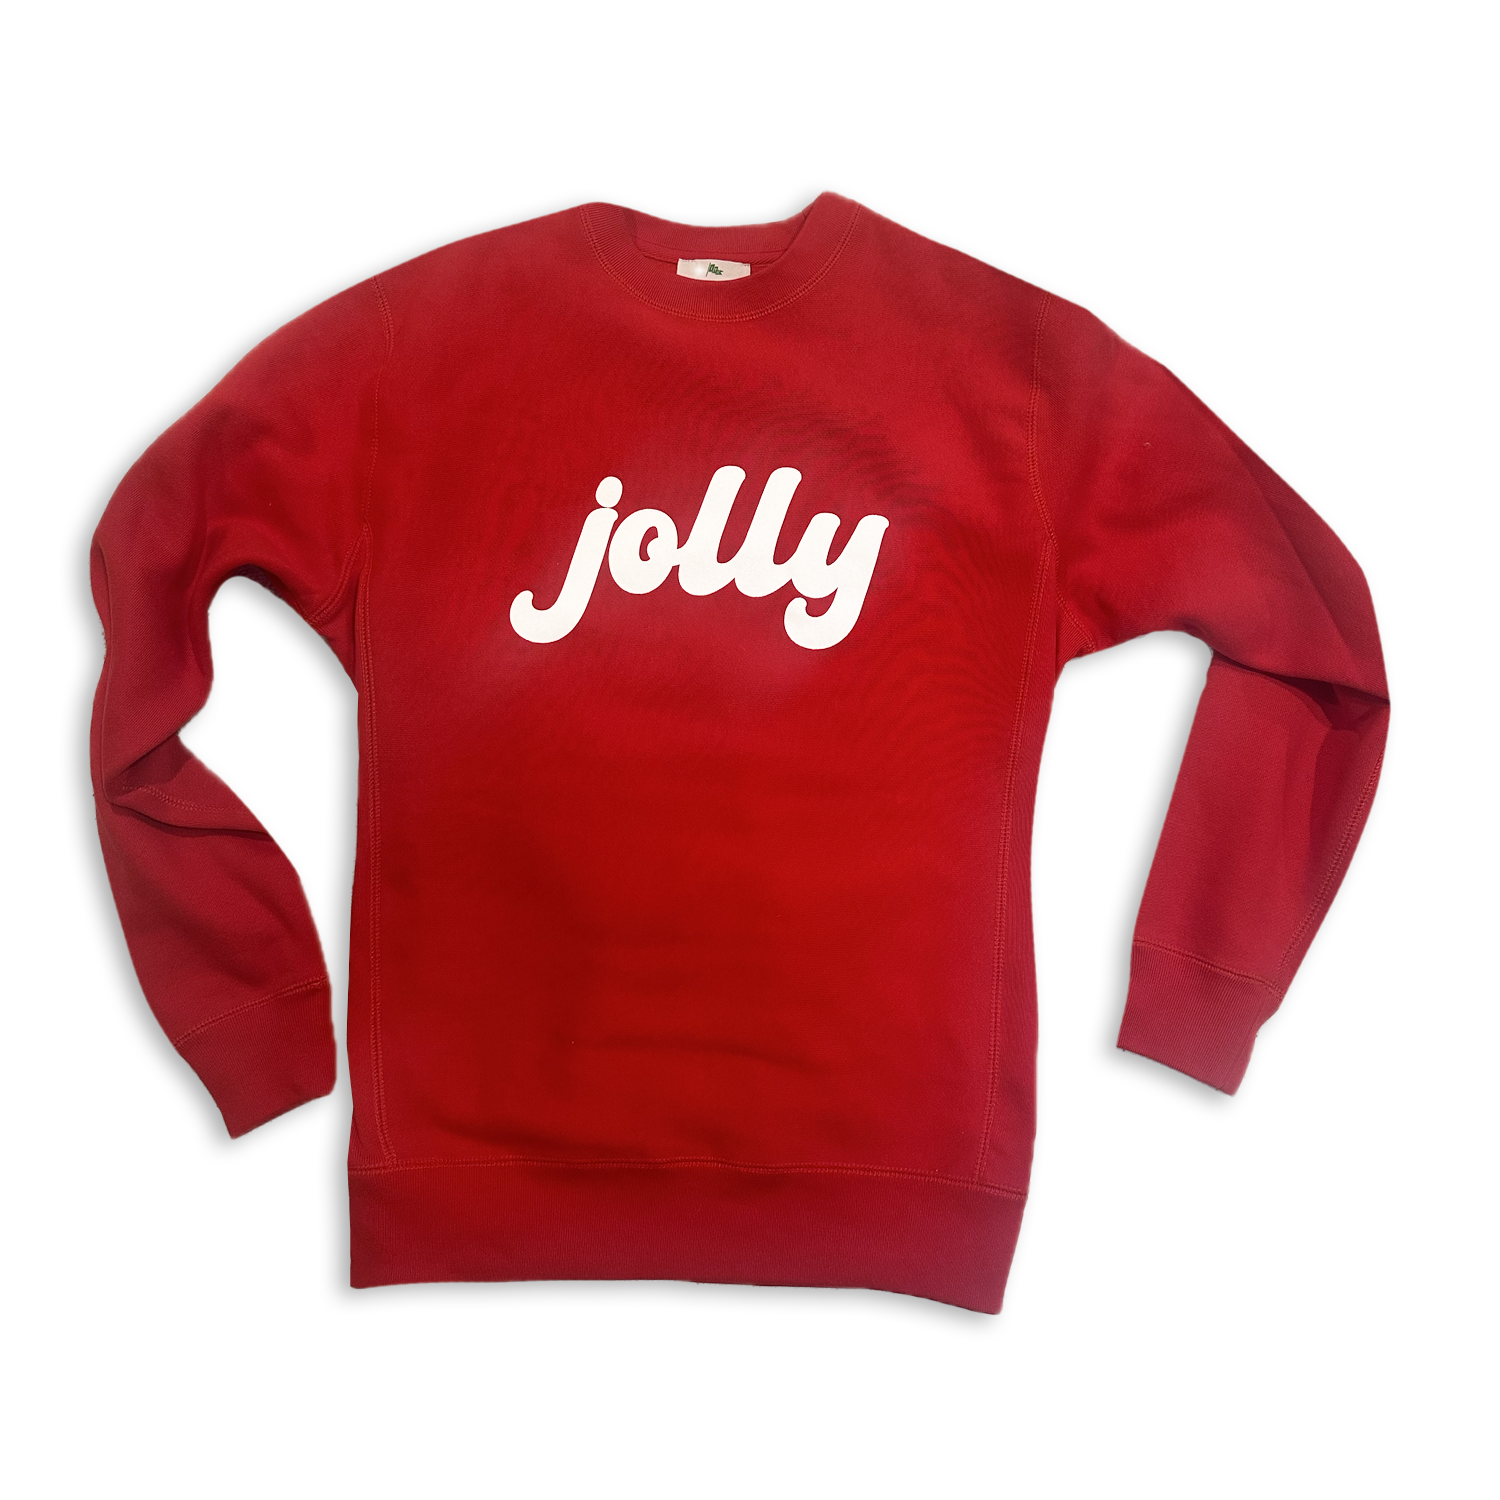 Jolly sweatshirt